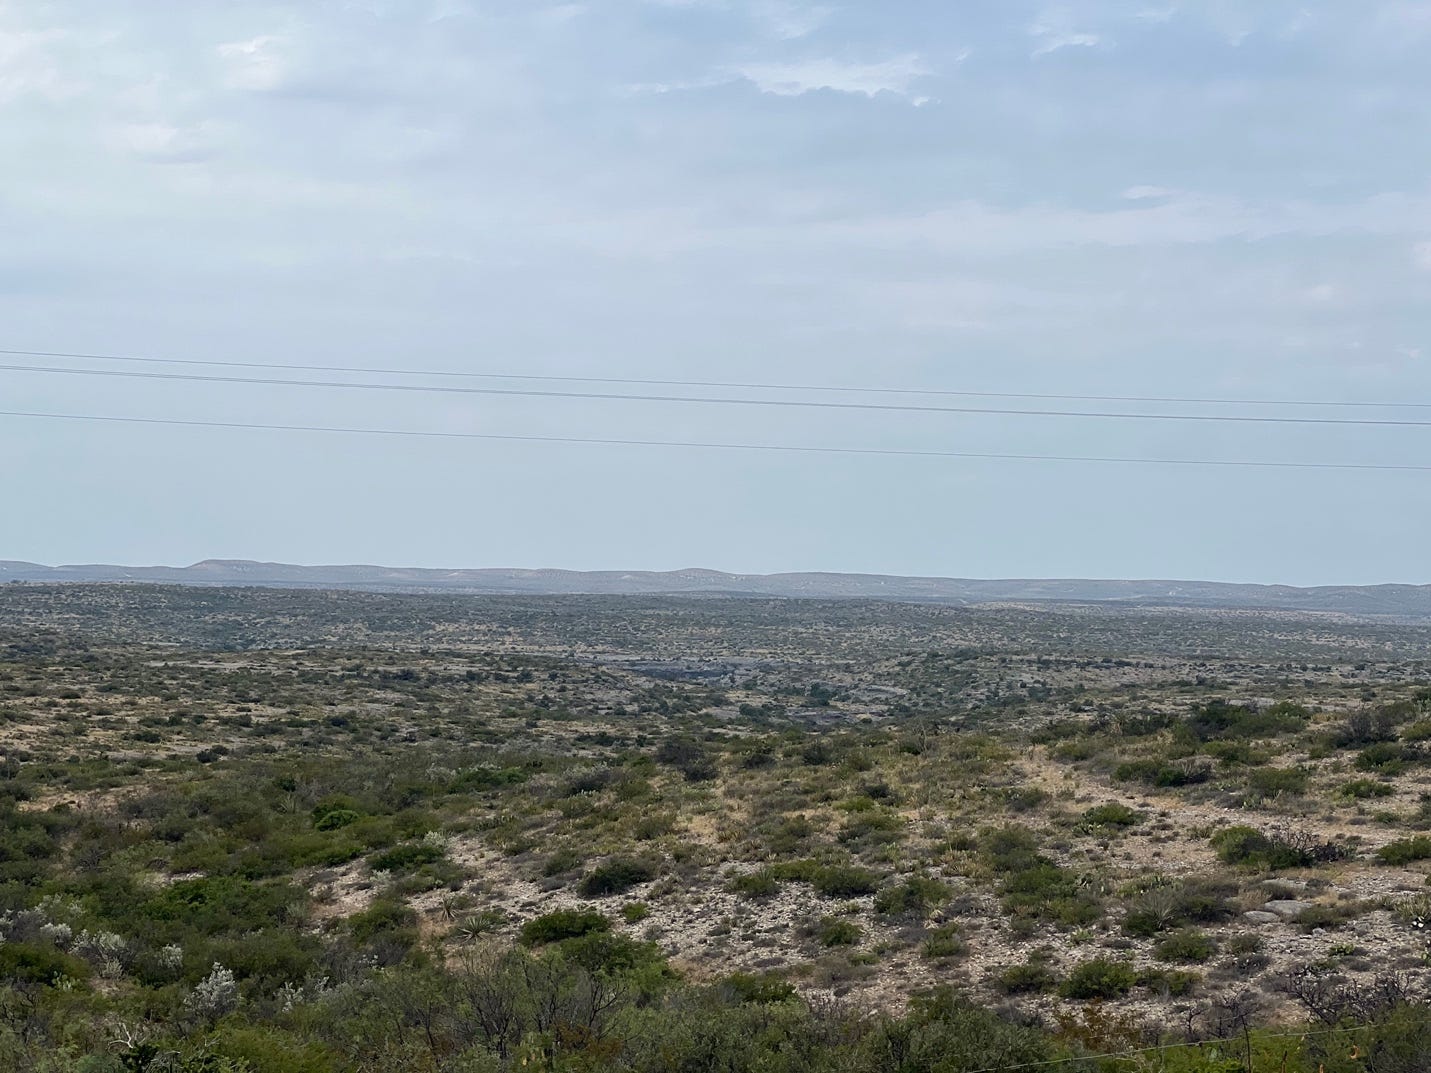 A landscape of a desert

Description automatically generated